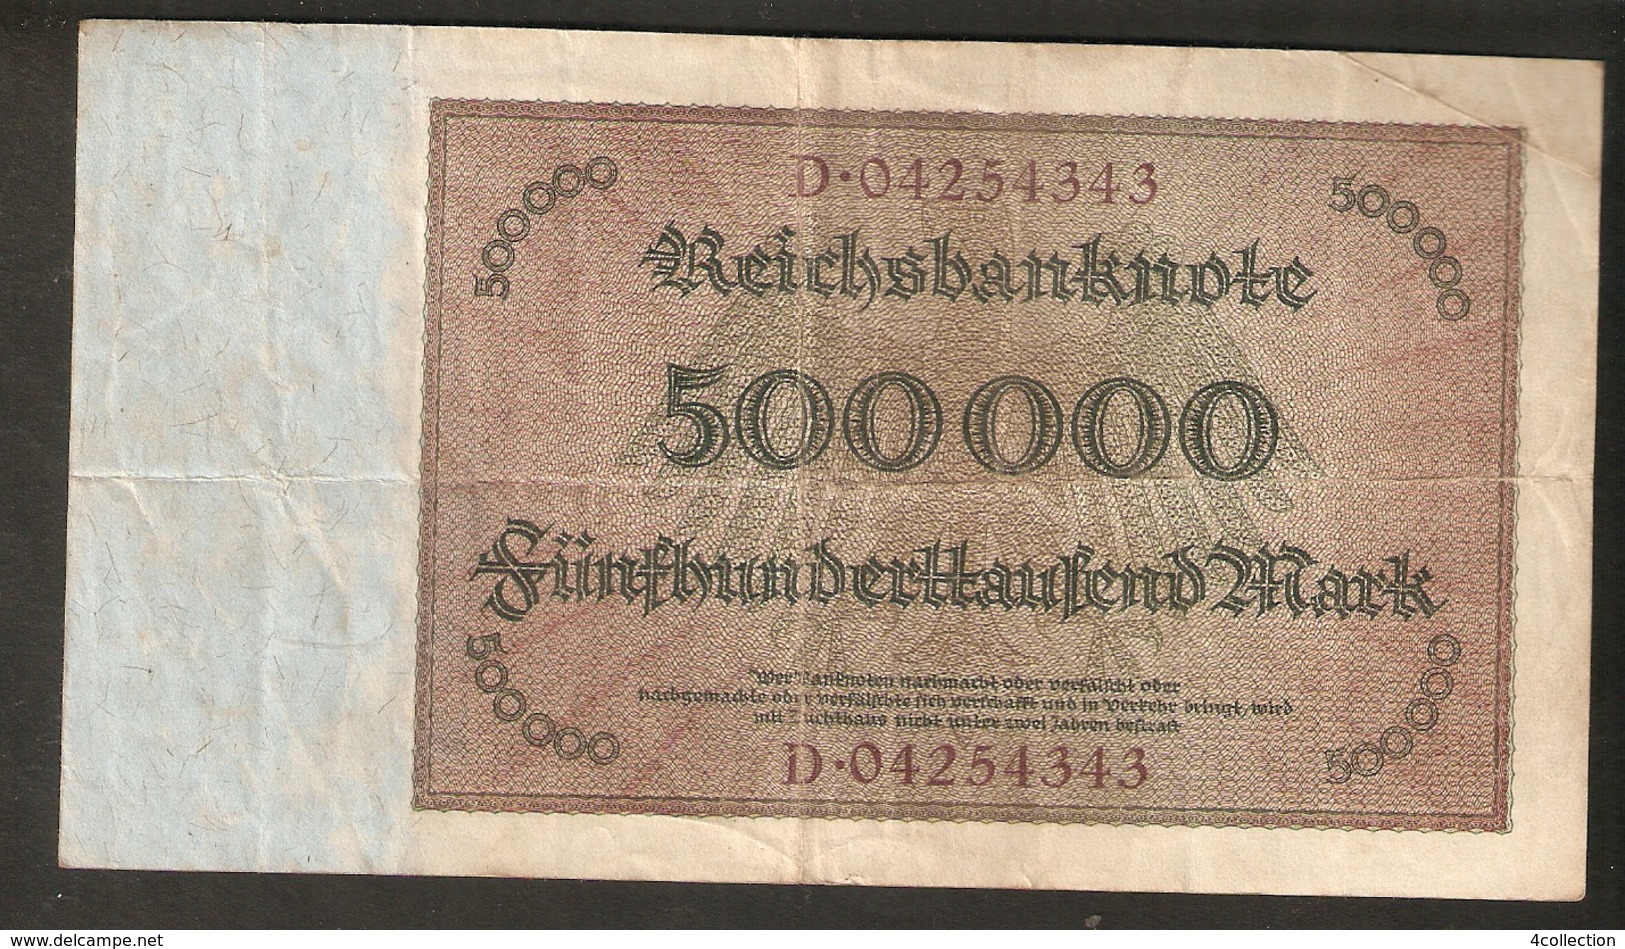 T. Germany Weimar Republic Reichsbanknote Funfhunderthaussend 500000 Mark 1923 # D . 04254343 - 500000 Mark